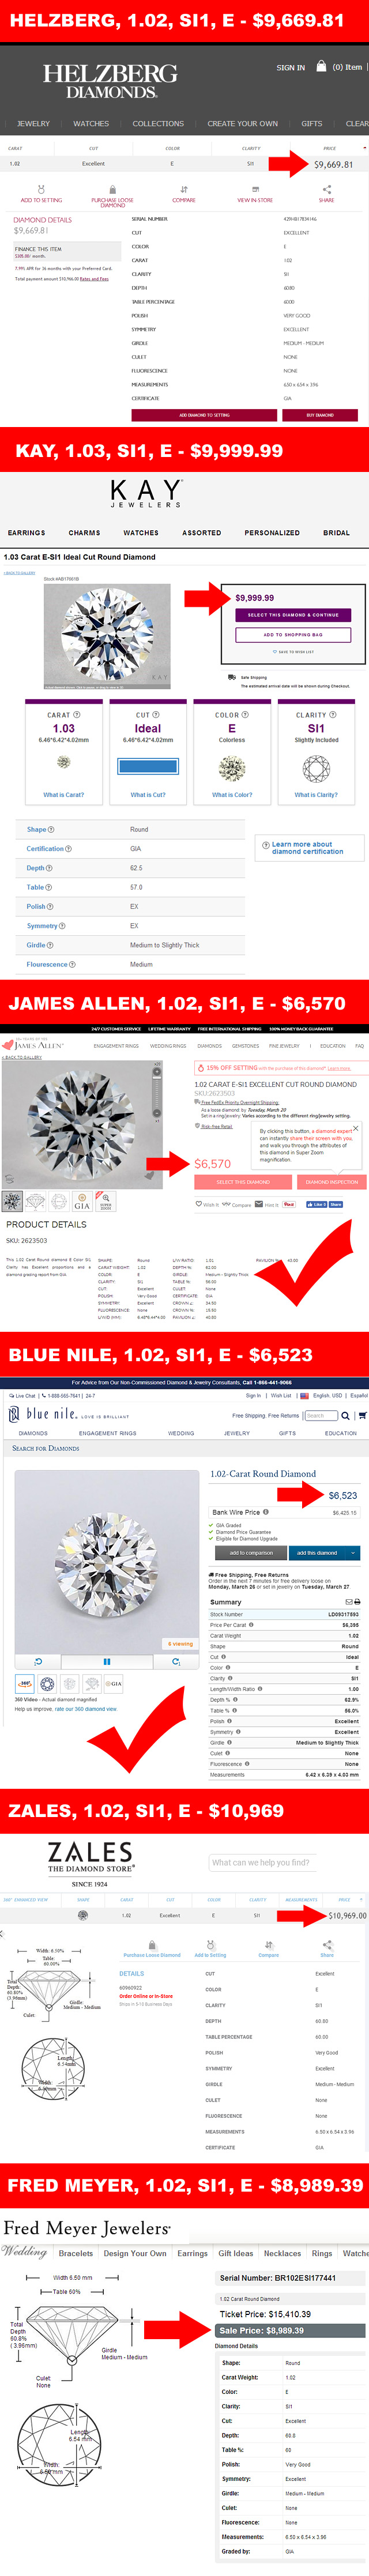 Compare Diamond Prices Online